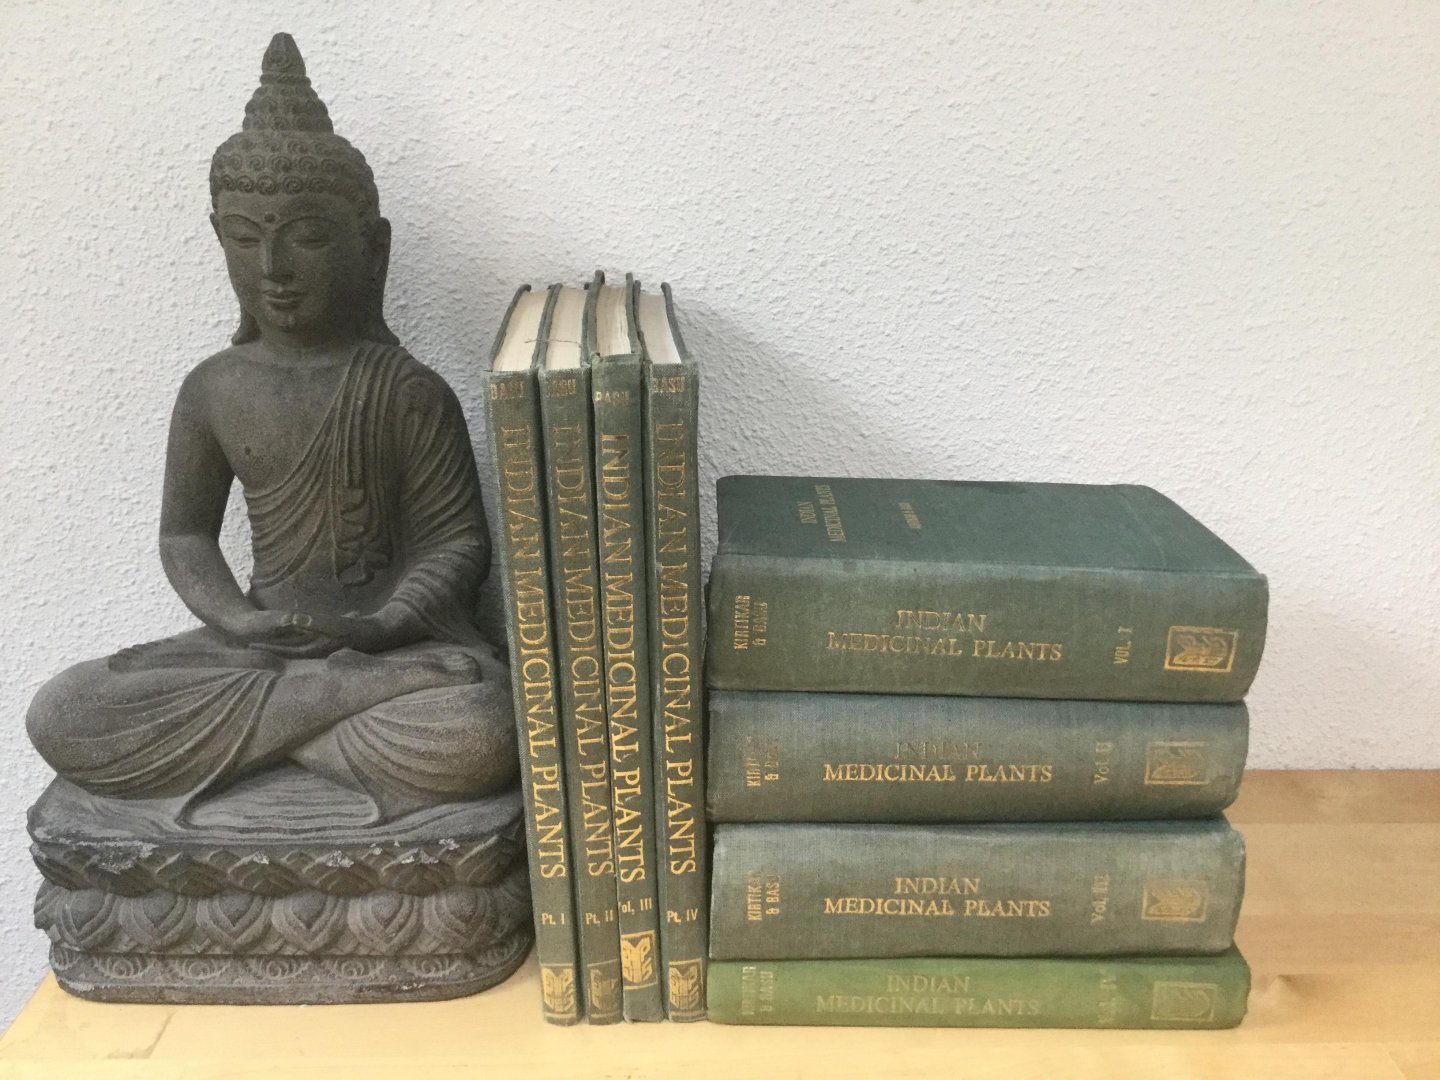 Kirtikar, Lt.-Colonel K.R., Basu, Major B.D. and an I.C.S. - Indian medicinal plants [8 volume set], volume I-IV (text) and part I-IV (plates)